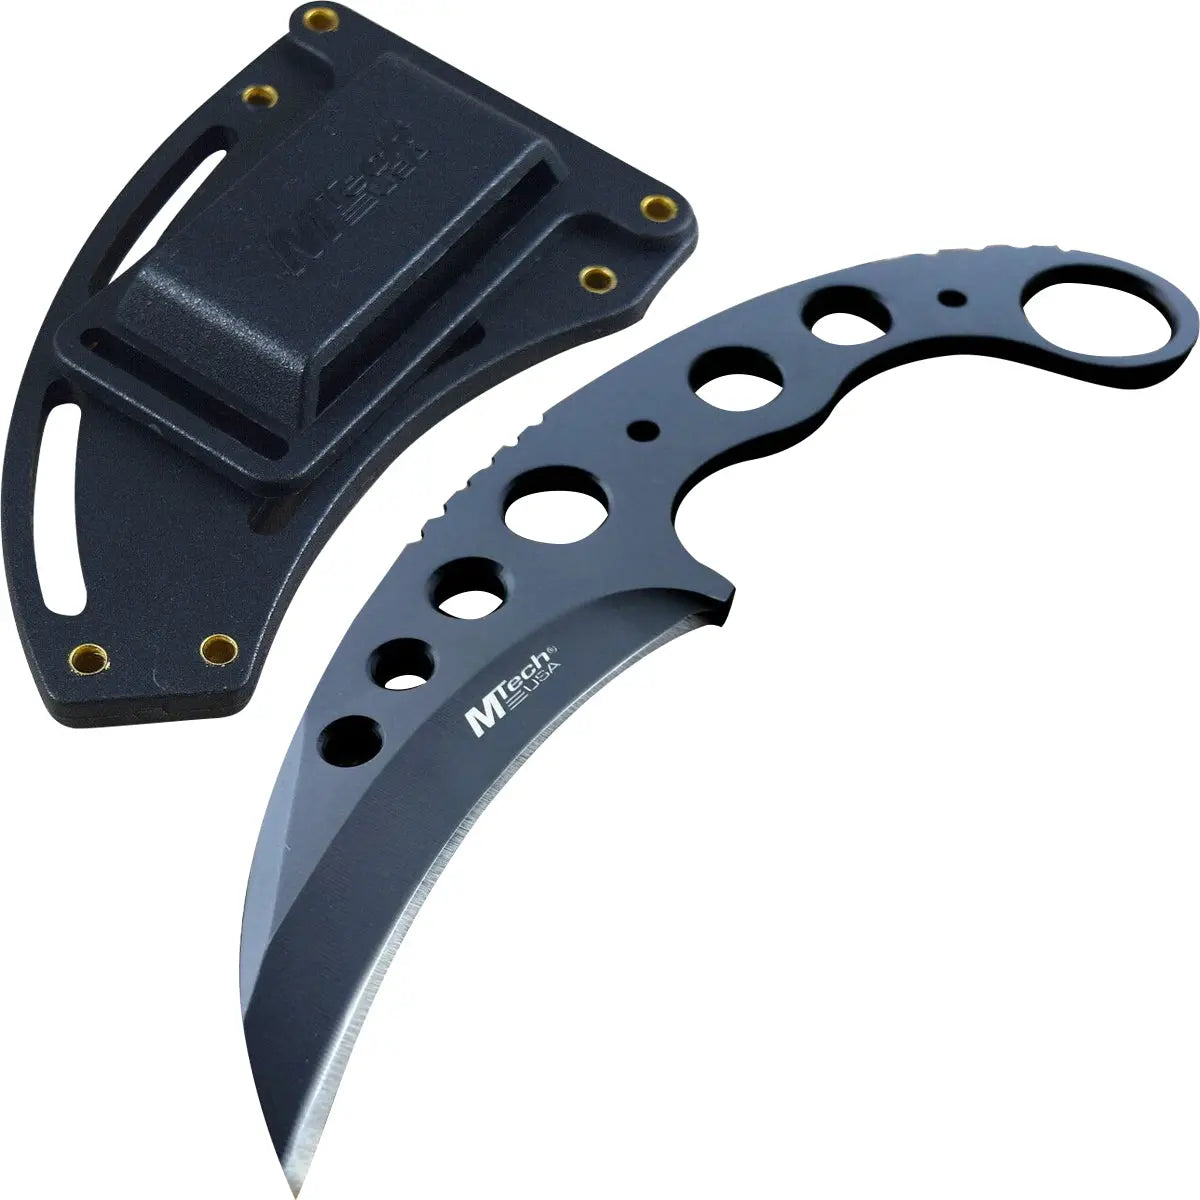 MTech USA Tactical Karambit Full Tang Fixed Blade Neck Knife, Black, MT-664BK M-Tech